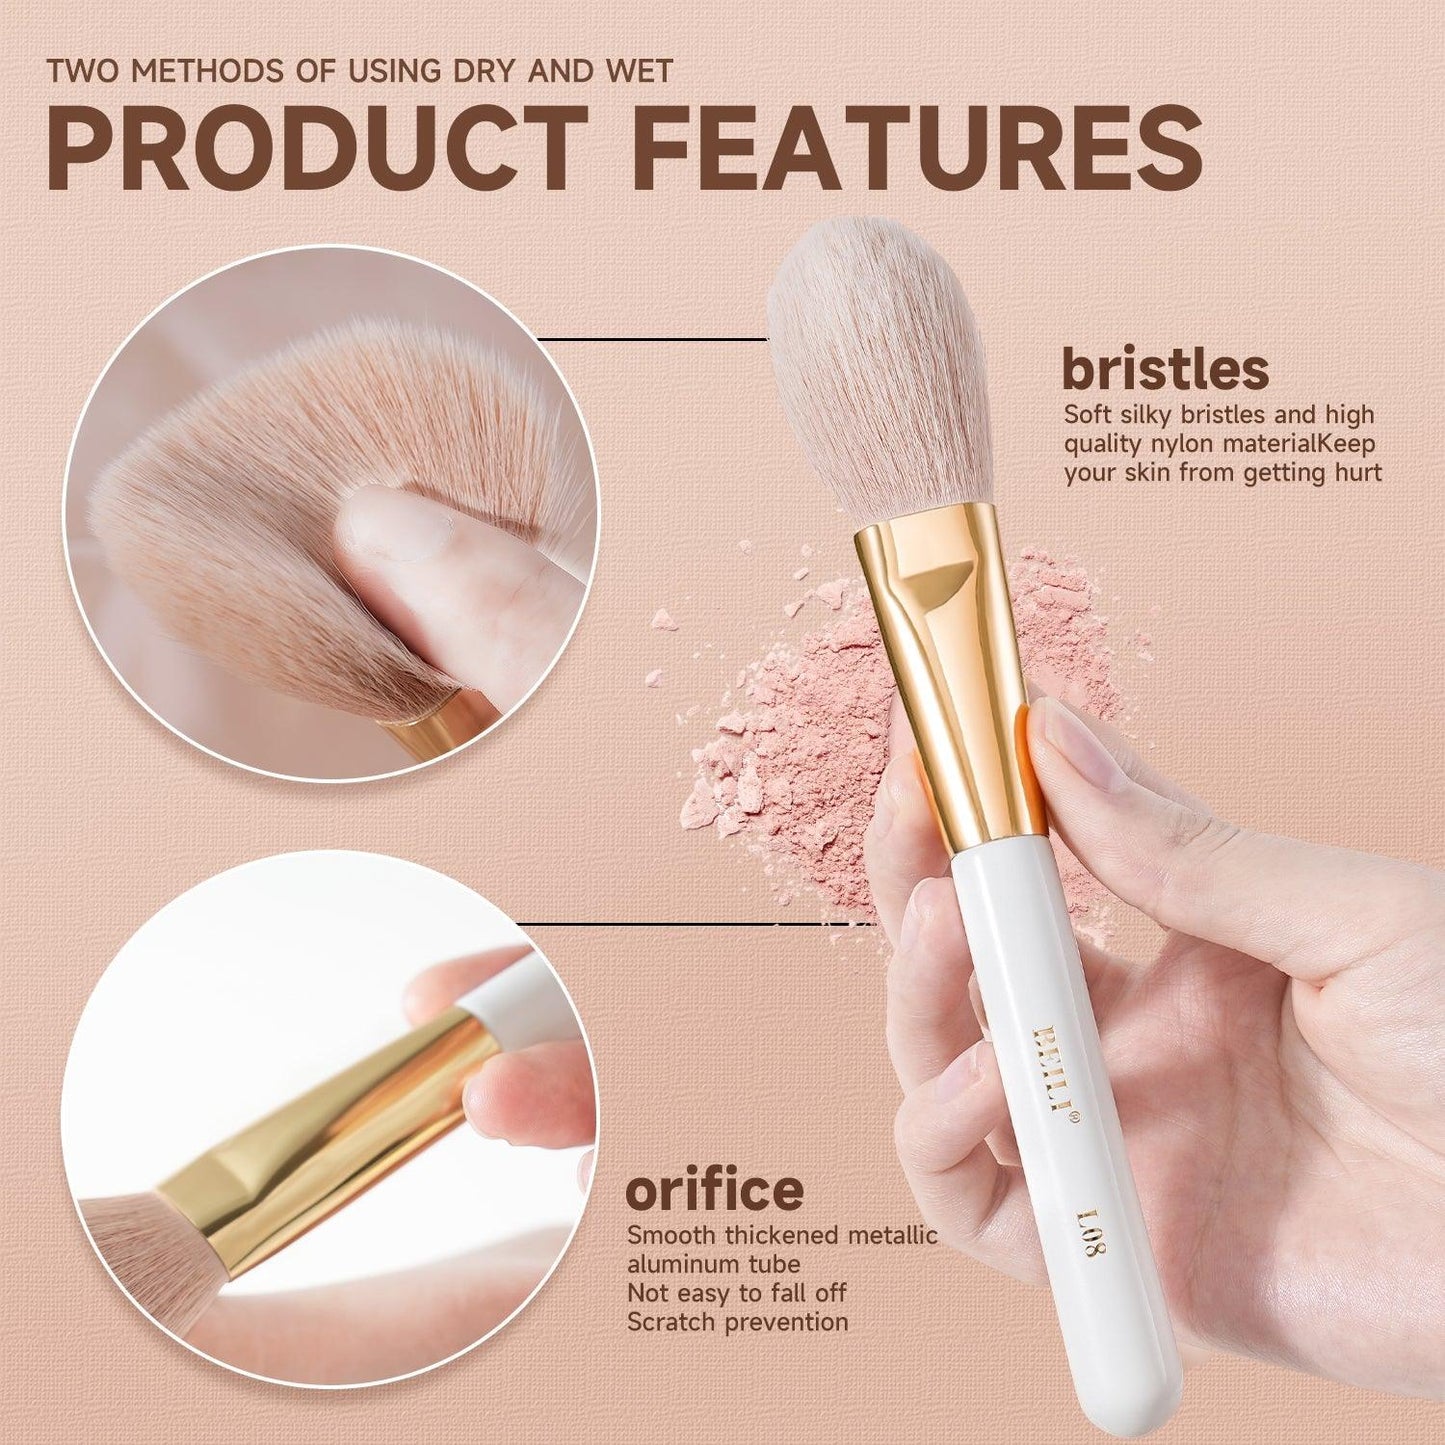 BEILI 20Pcs Premium Pink Vegan Makeup Brush Set WG20 - BEILI Official Shop